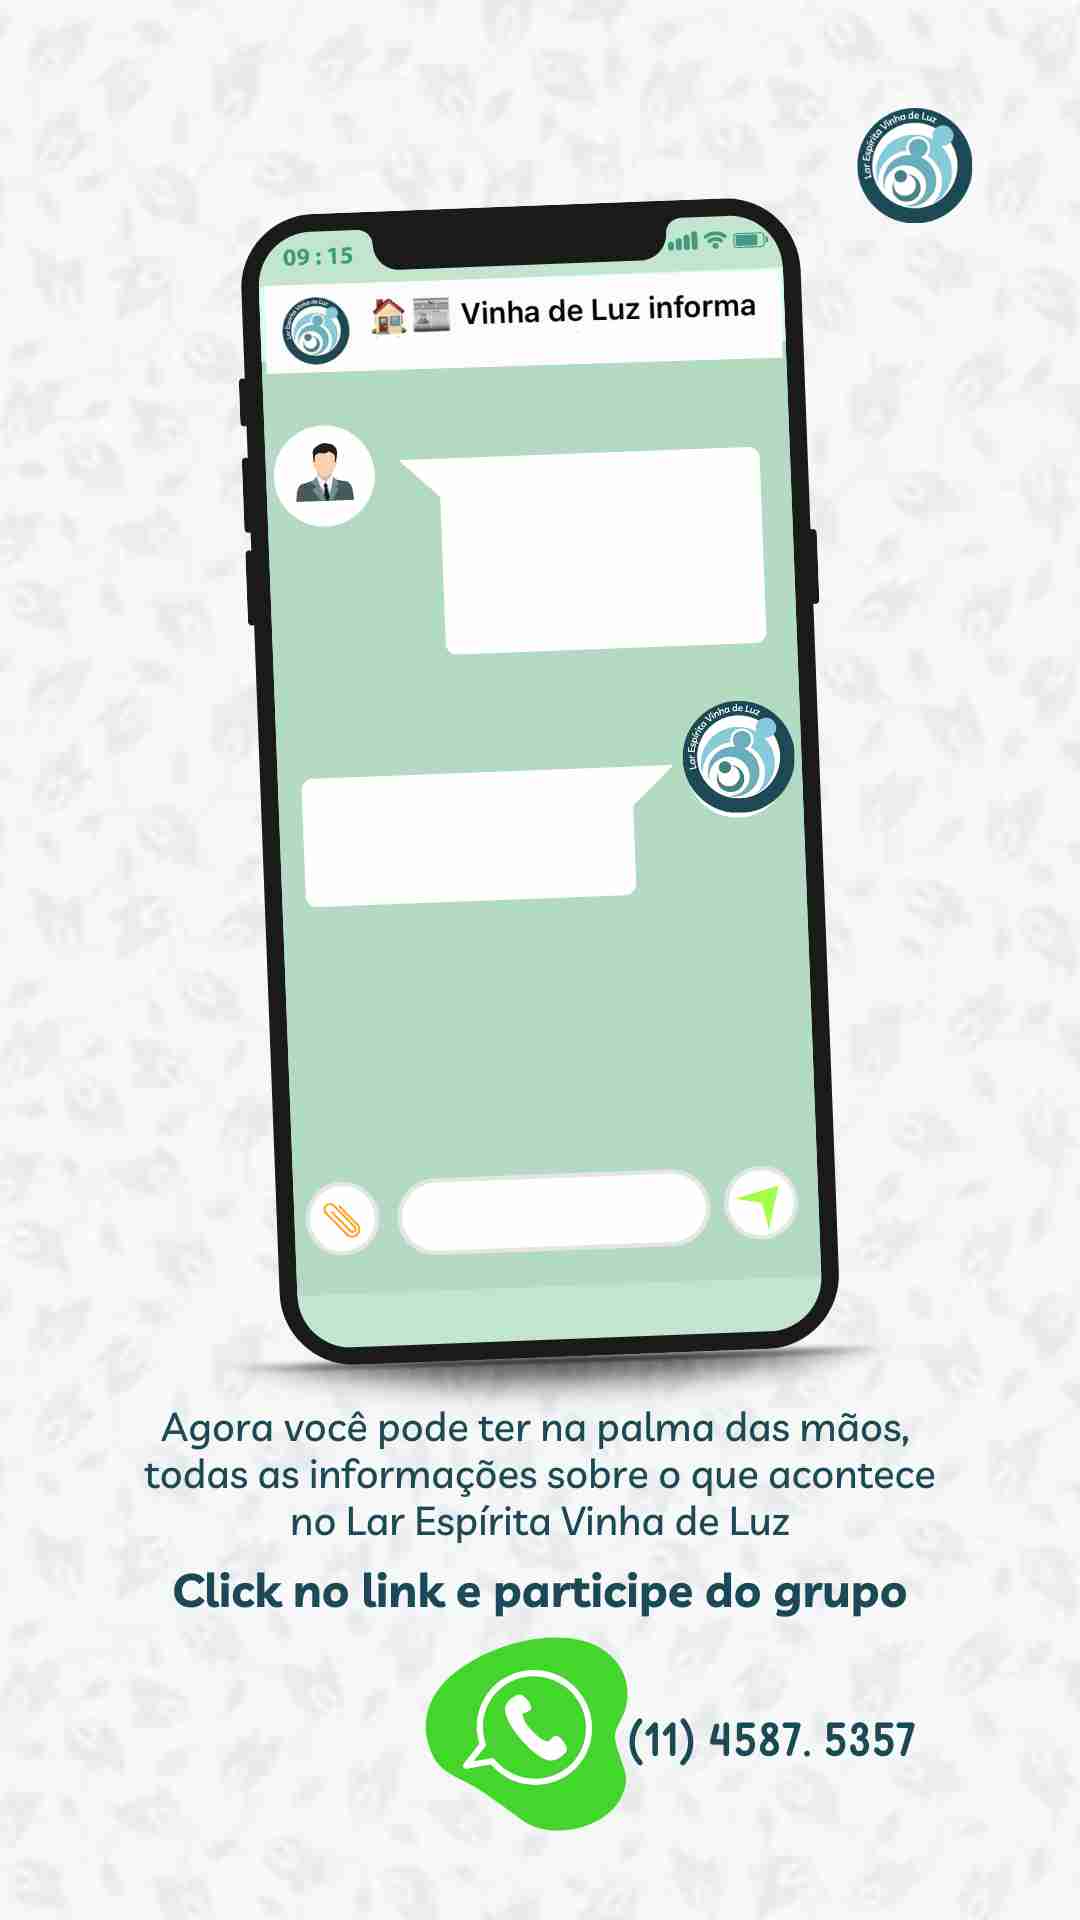 Whatsapp Vinha de Luz Informa